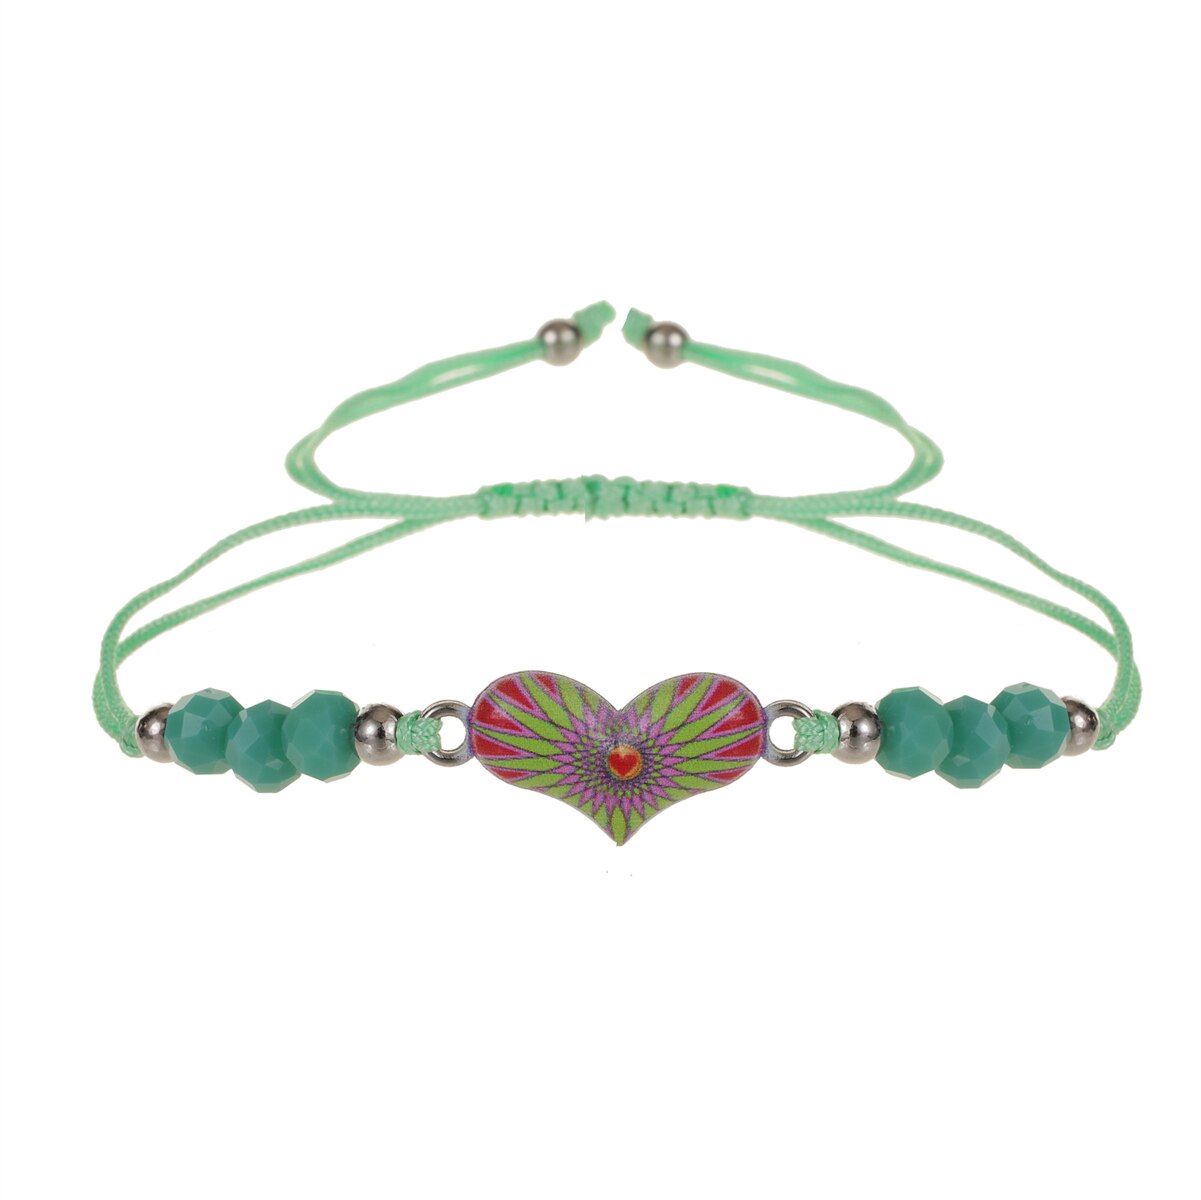 Enamel Charms Elastic Heart Pendant Bracelet for Women Adjustable Braided Rope Chain Crystal Bead Wristband Bracelet Jewelry